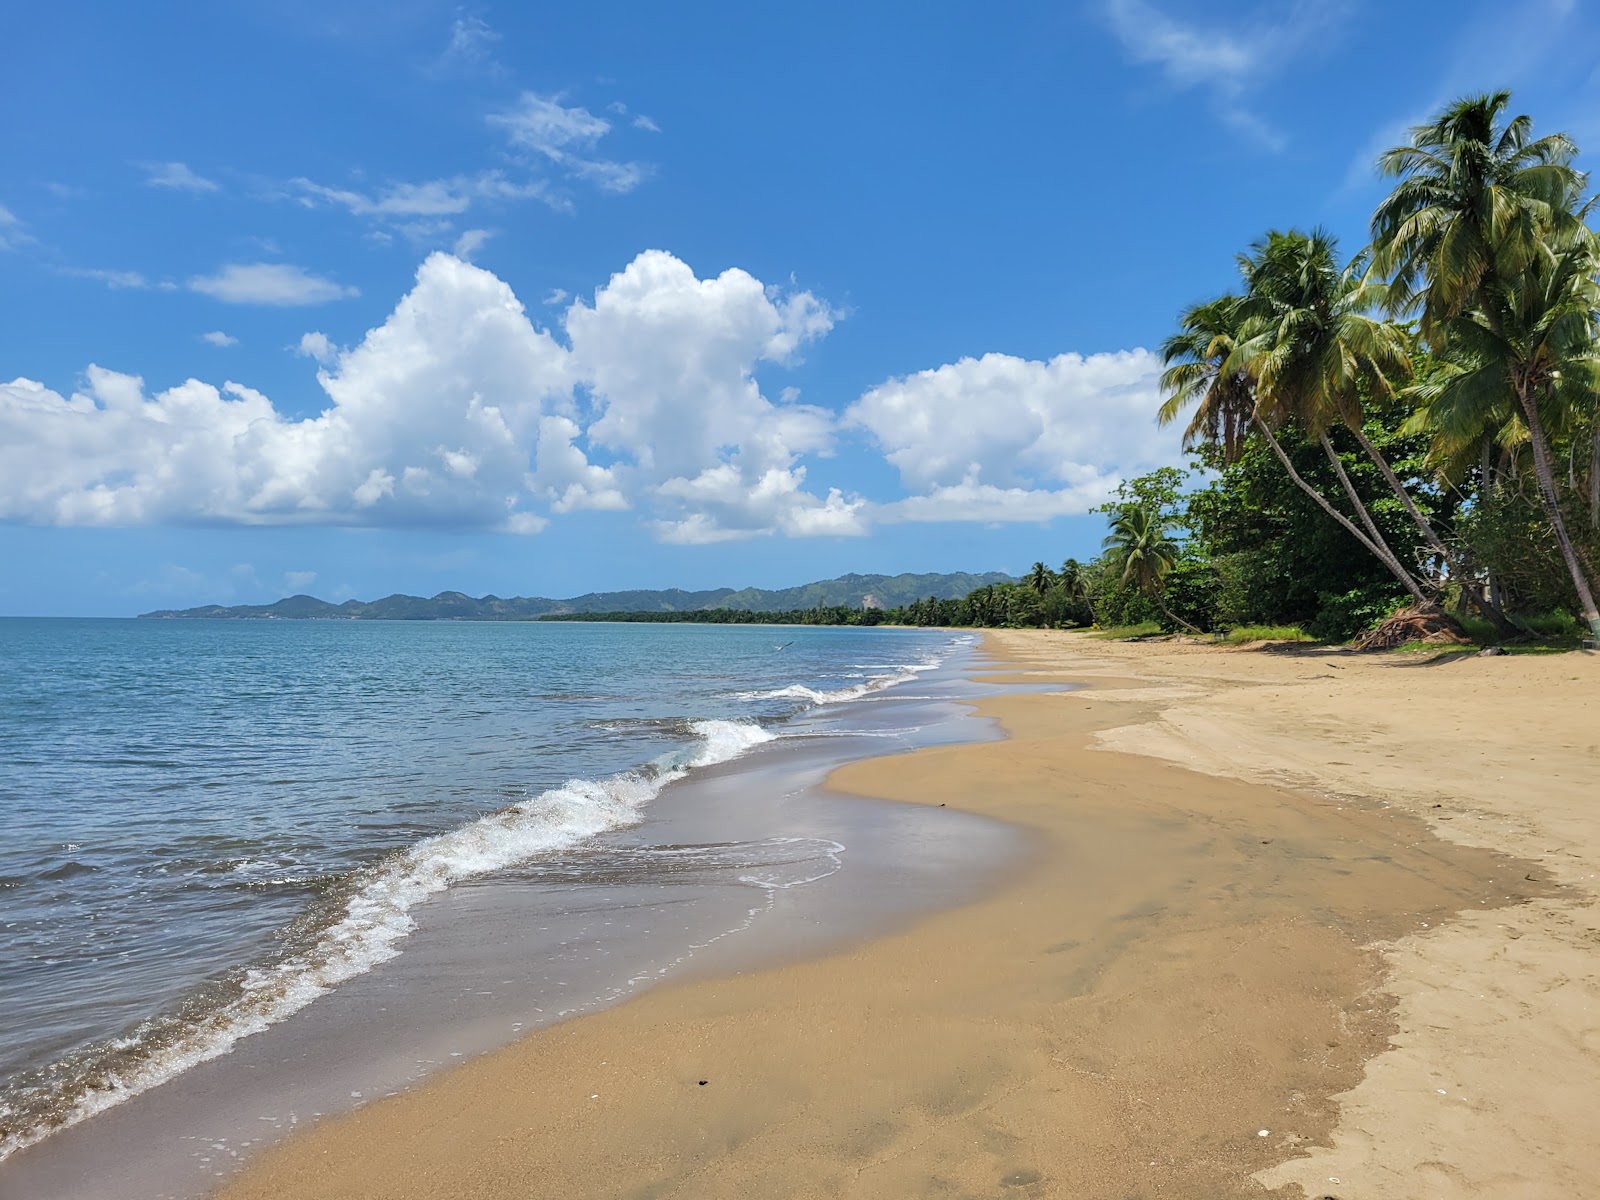 Photo of Playa Sabaneta with bright sand surface